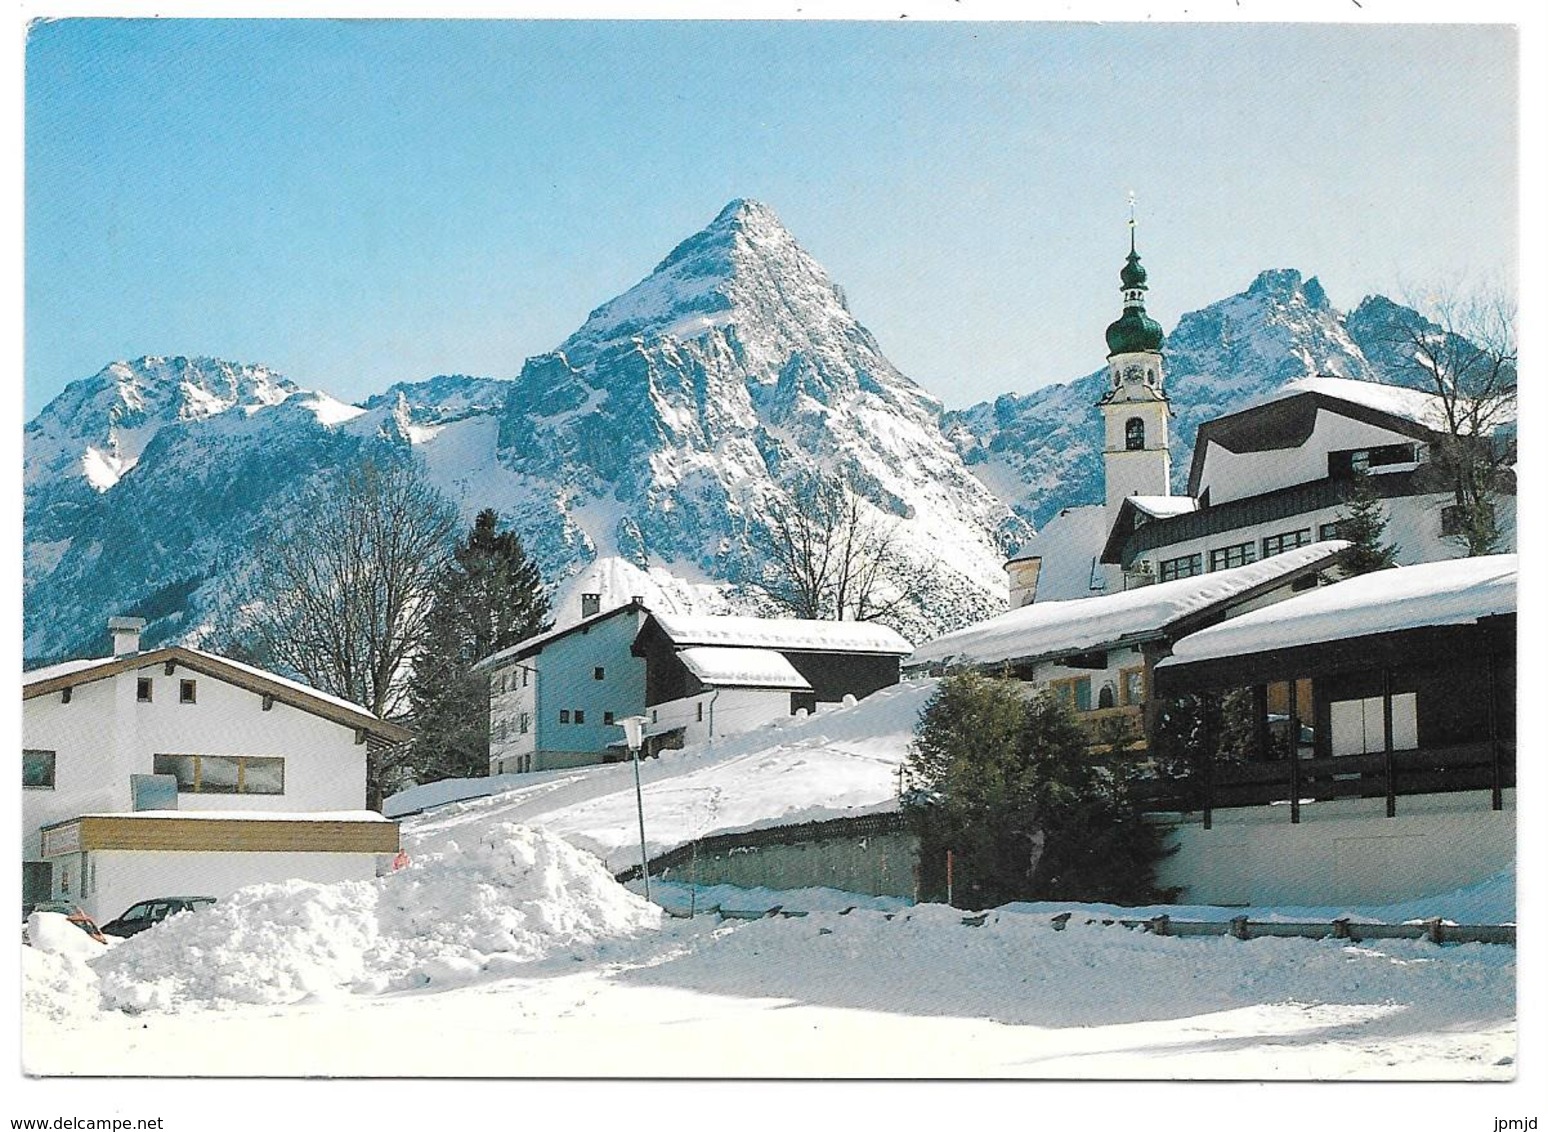 Wintersportplatz Lermoos, Tirol - Verlag Franz Milz Nr. W 243/6 - Lermoos